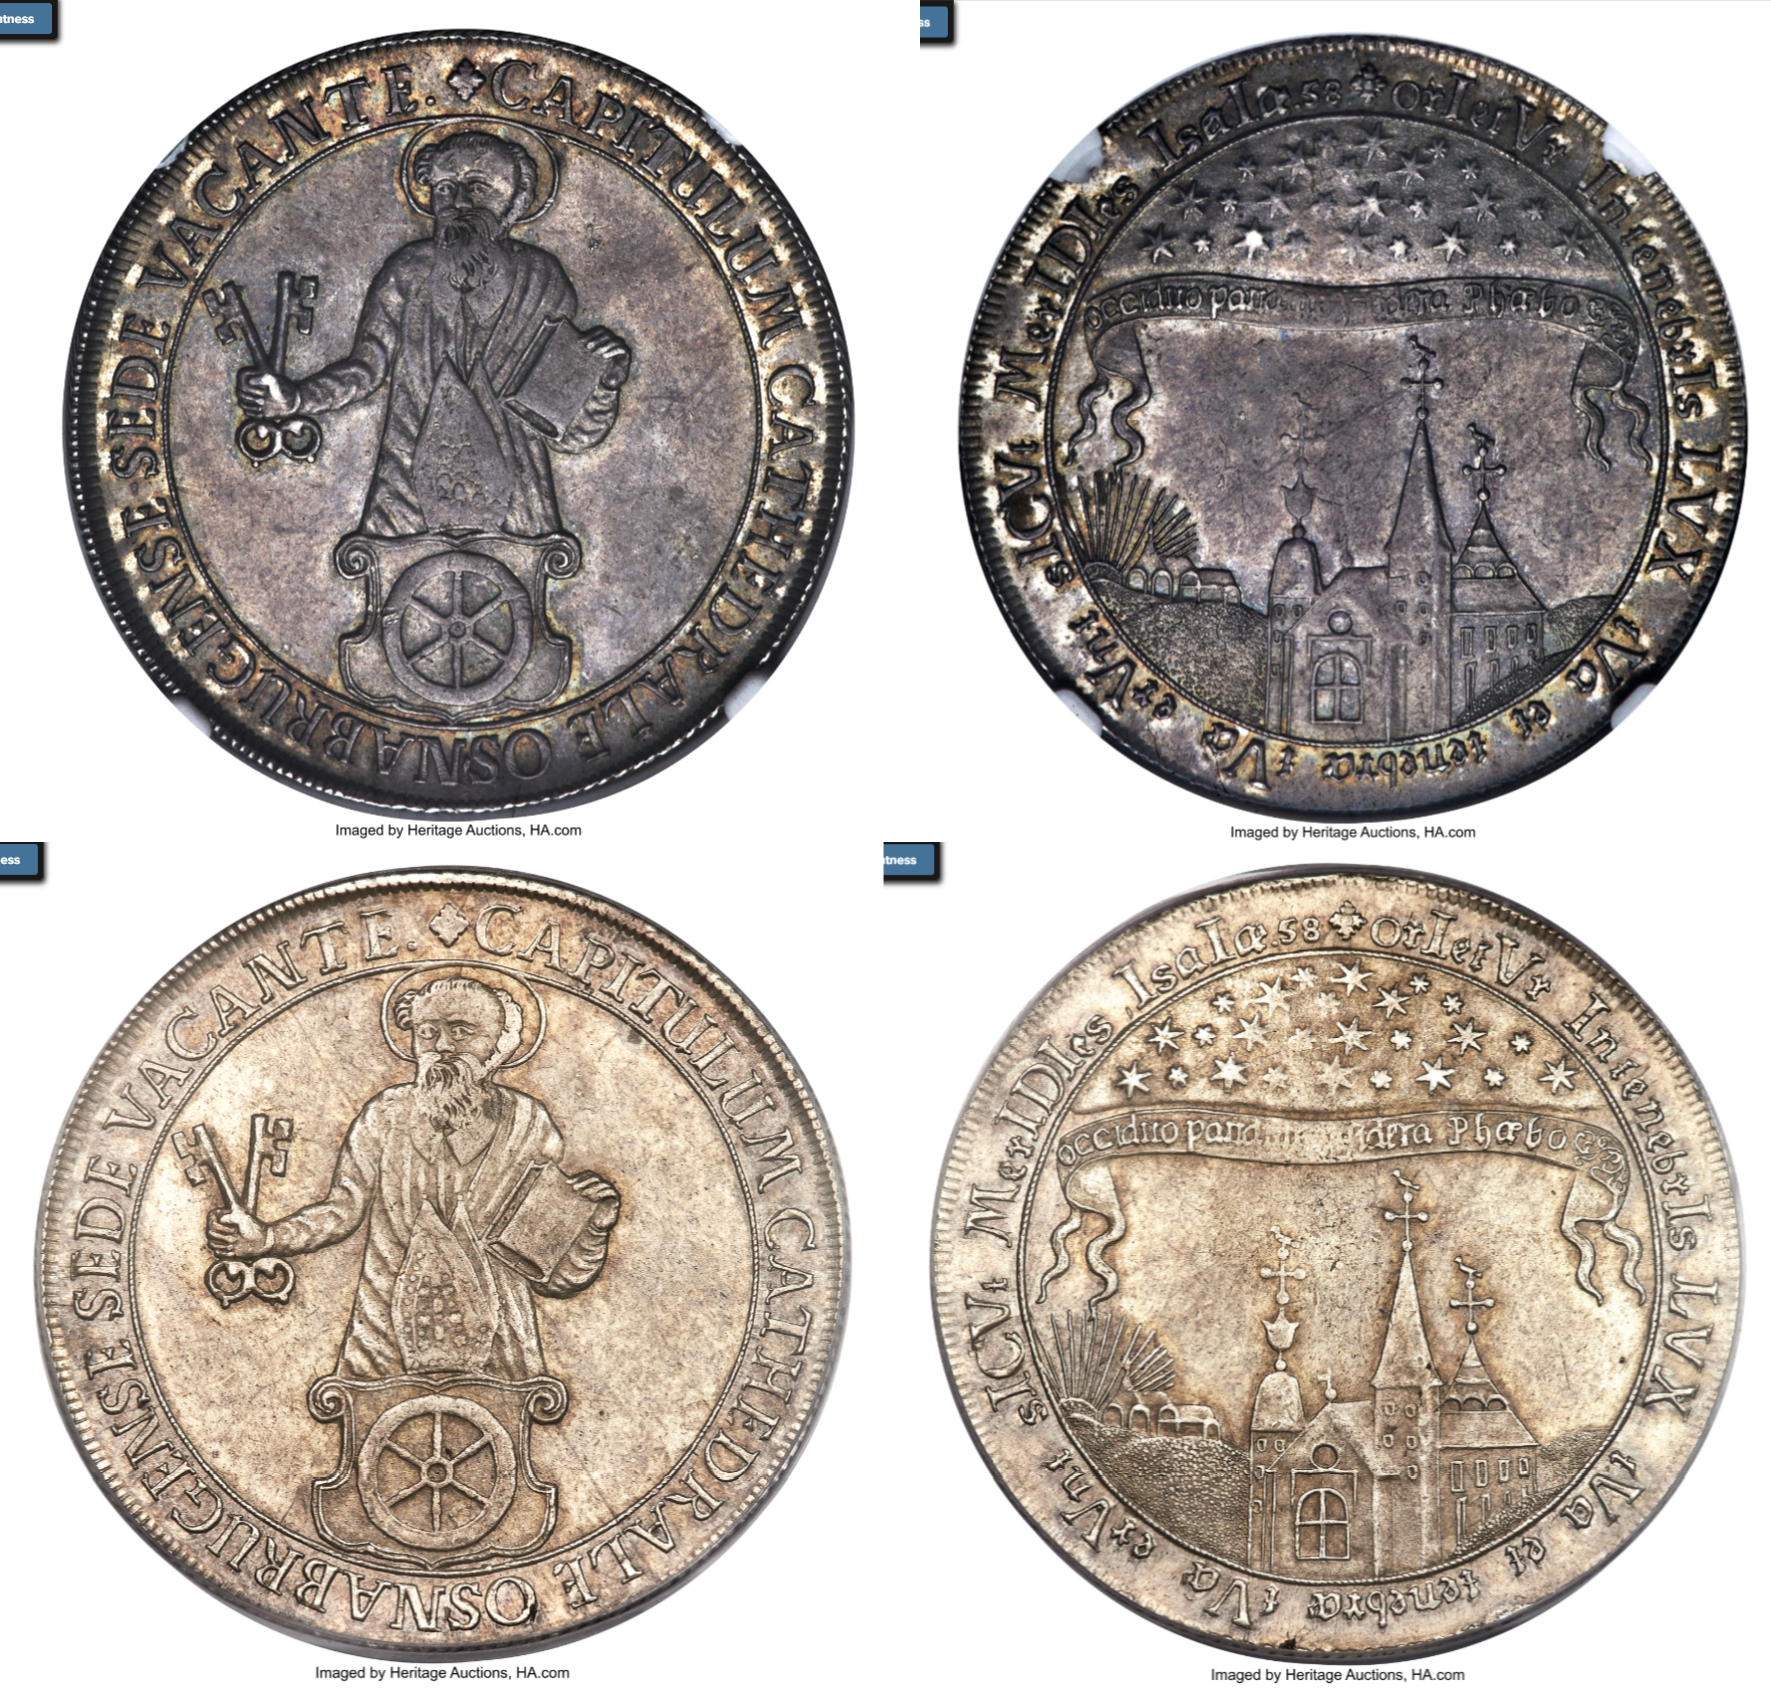 Sede Vacante coin PCGS AU55 vs NGC MS64+ | Coin Talk